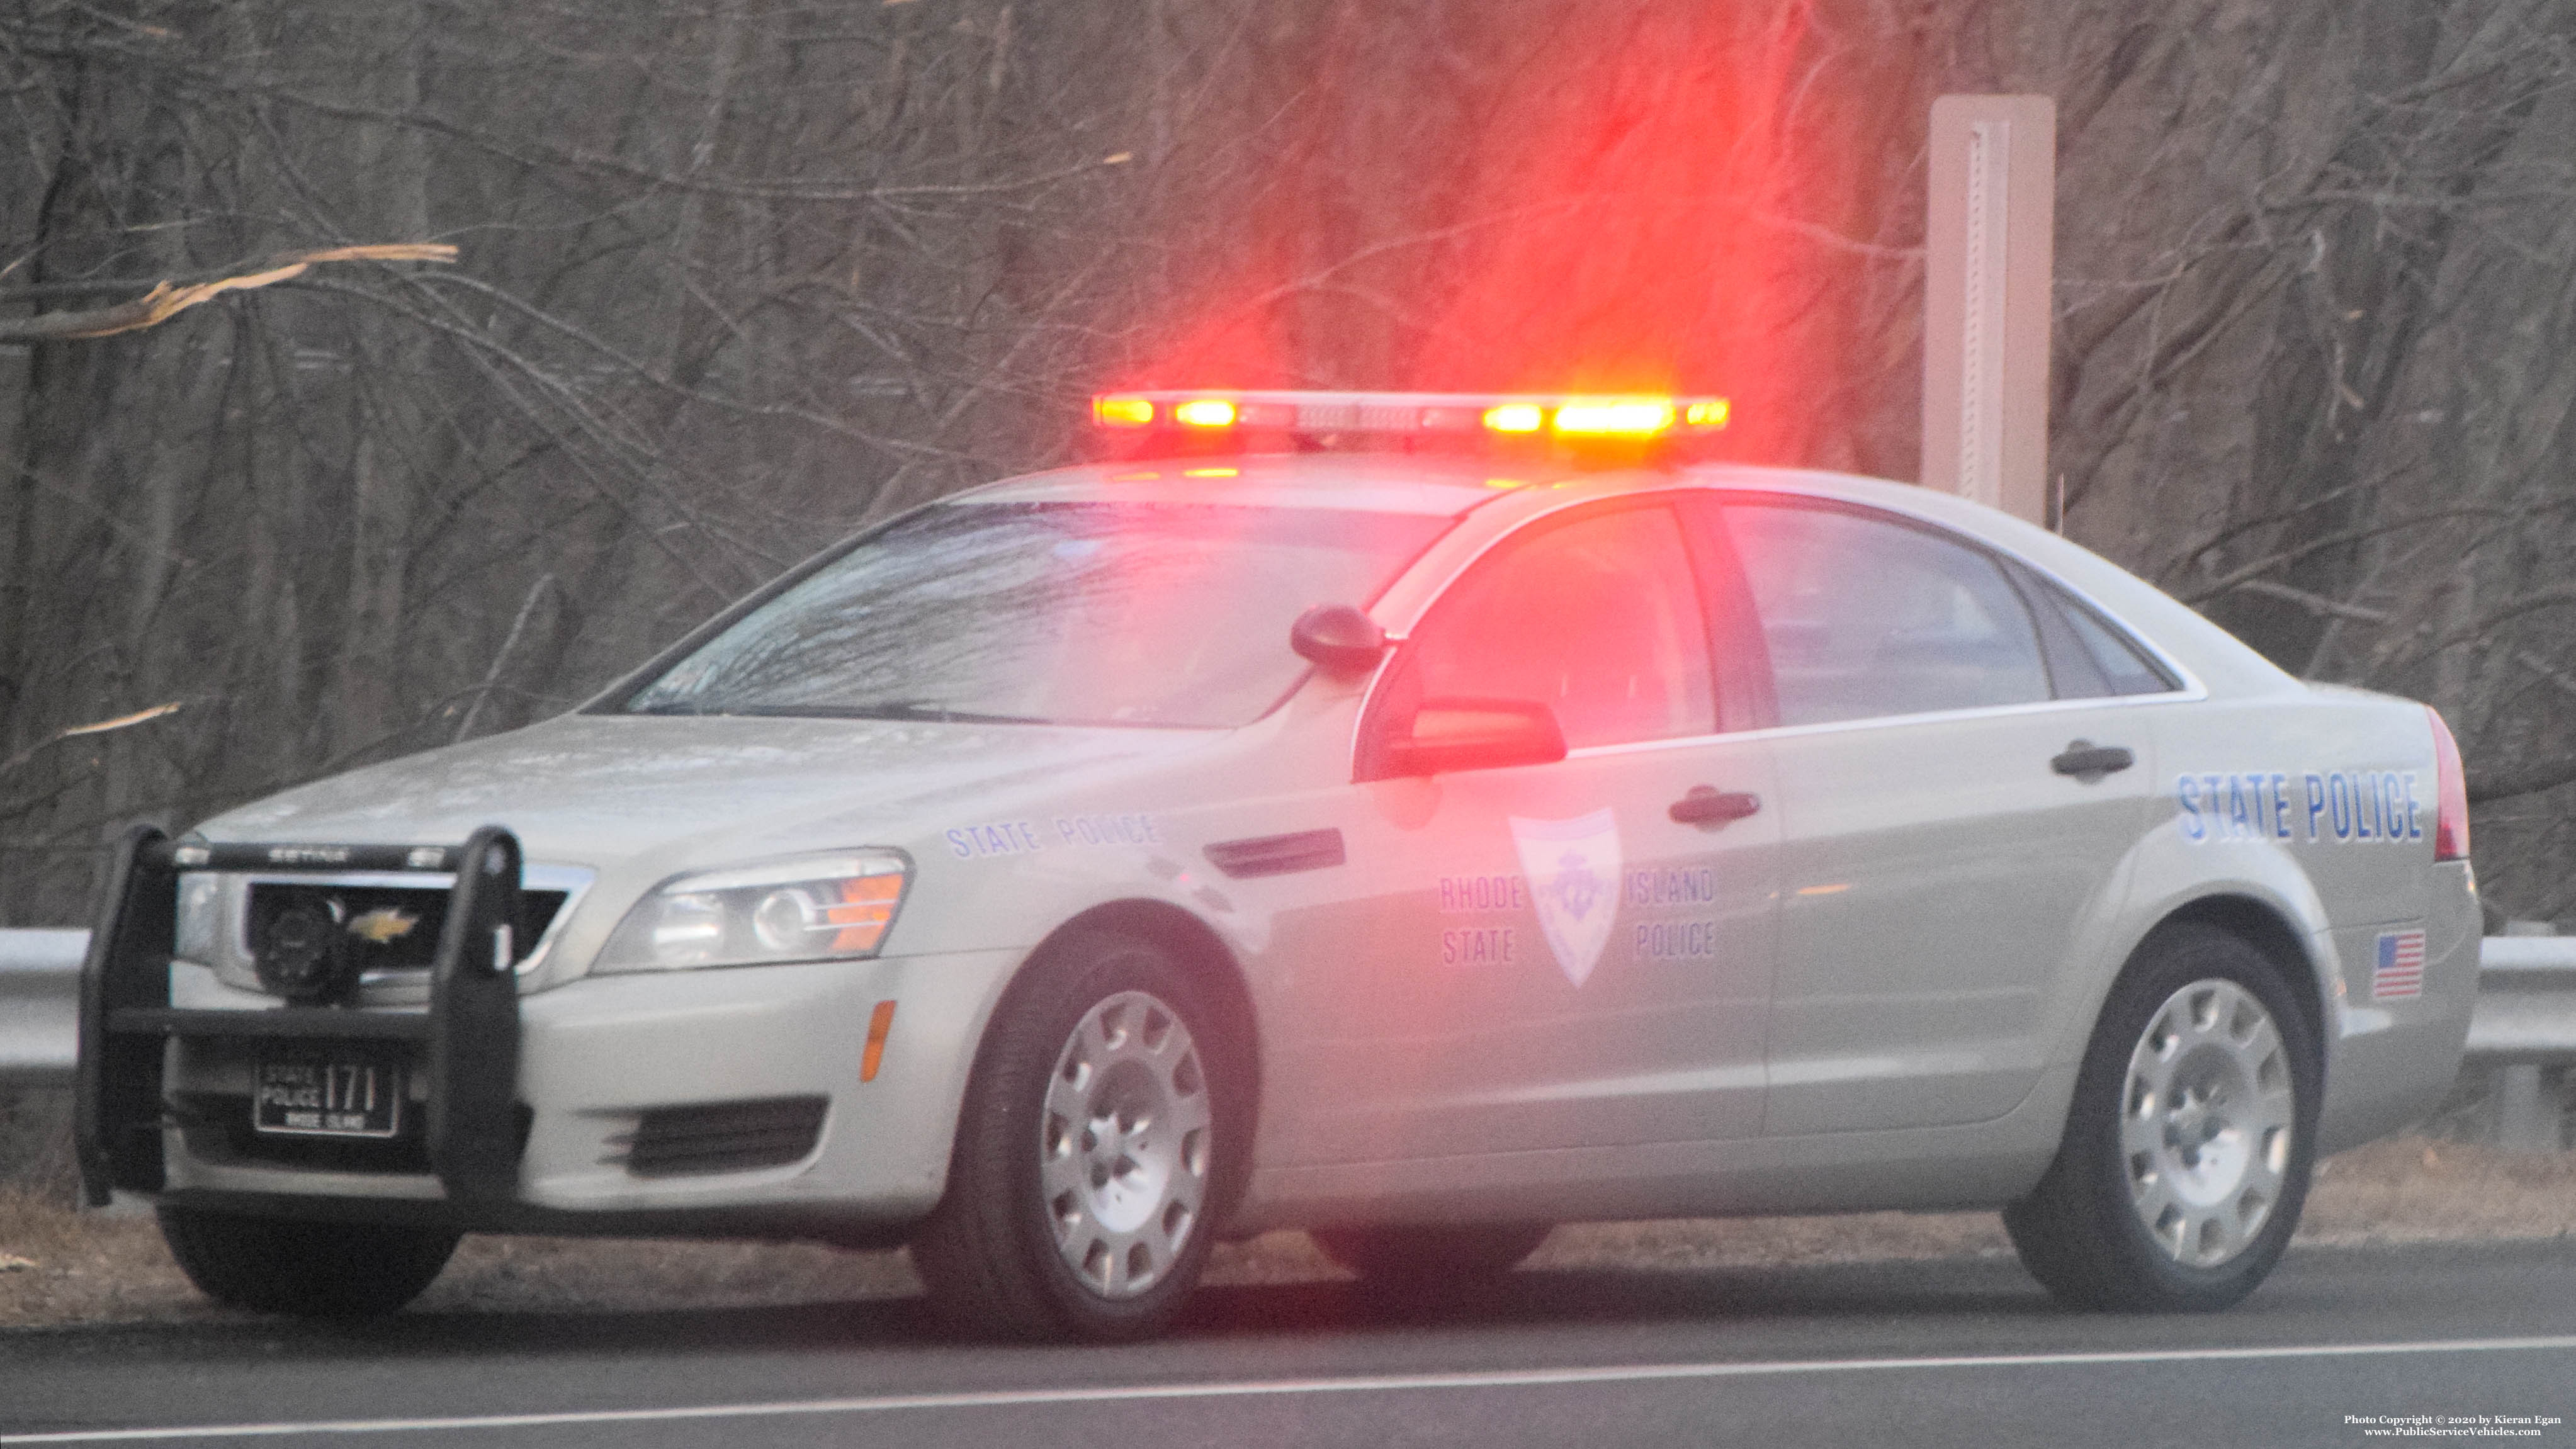 A photo  of Rhode Island State Police
            Cruiser 171, a 2013 Chevrolet Caprice             taken by Kieran Egan